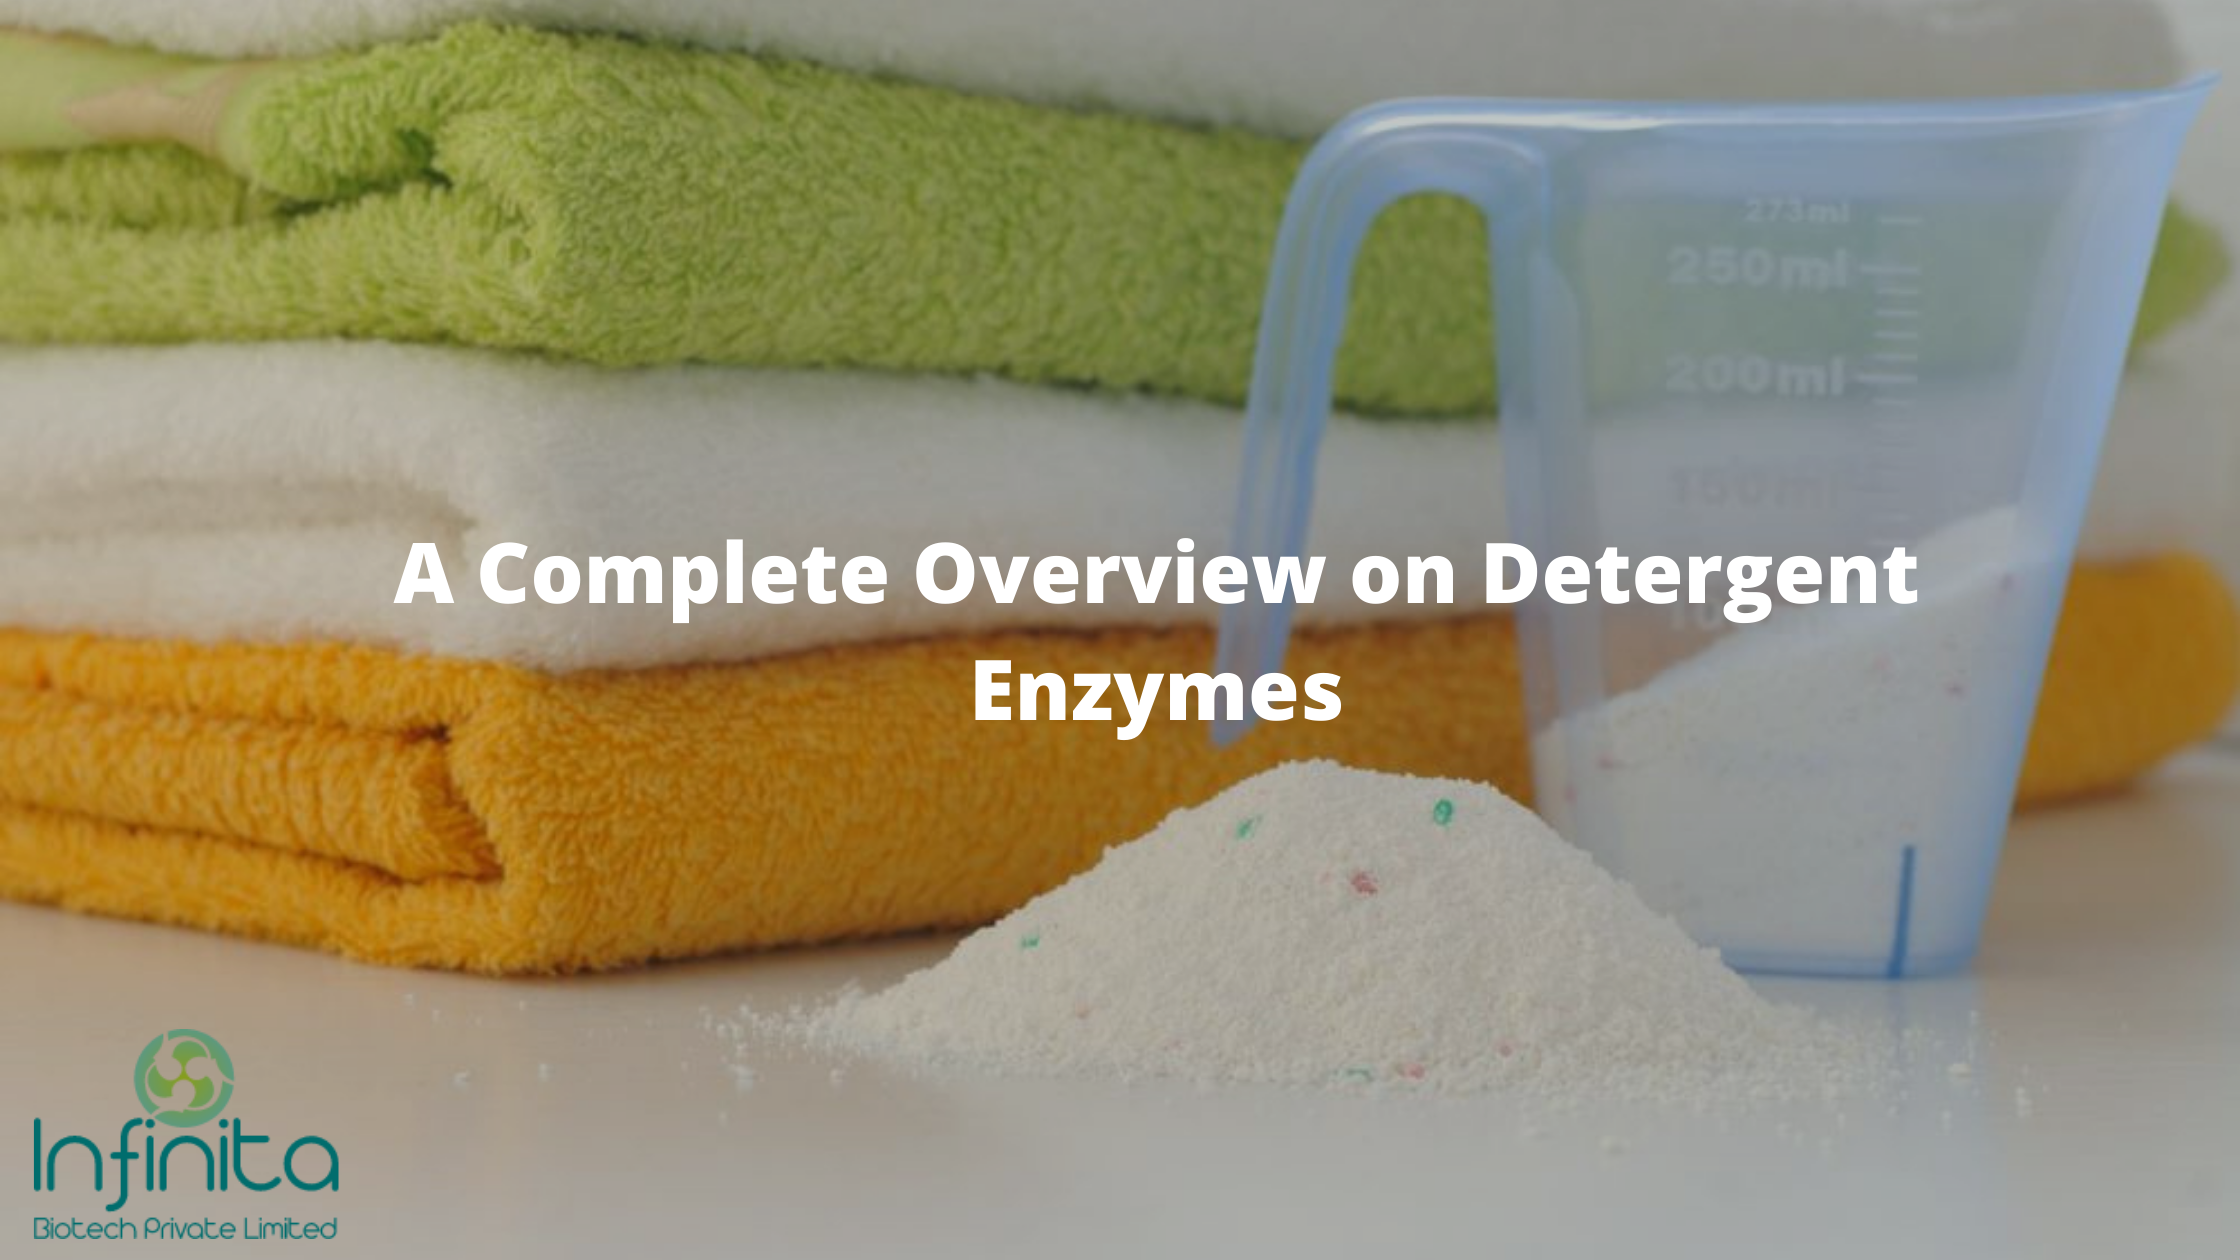 detergent enzymes